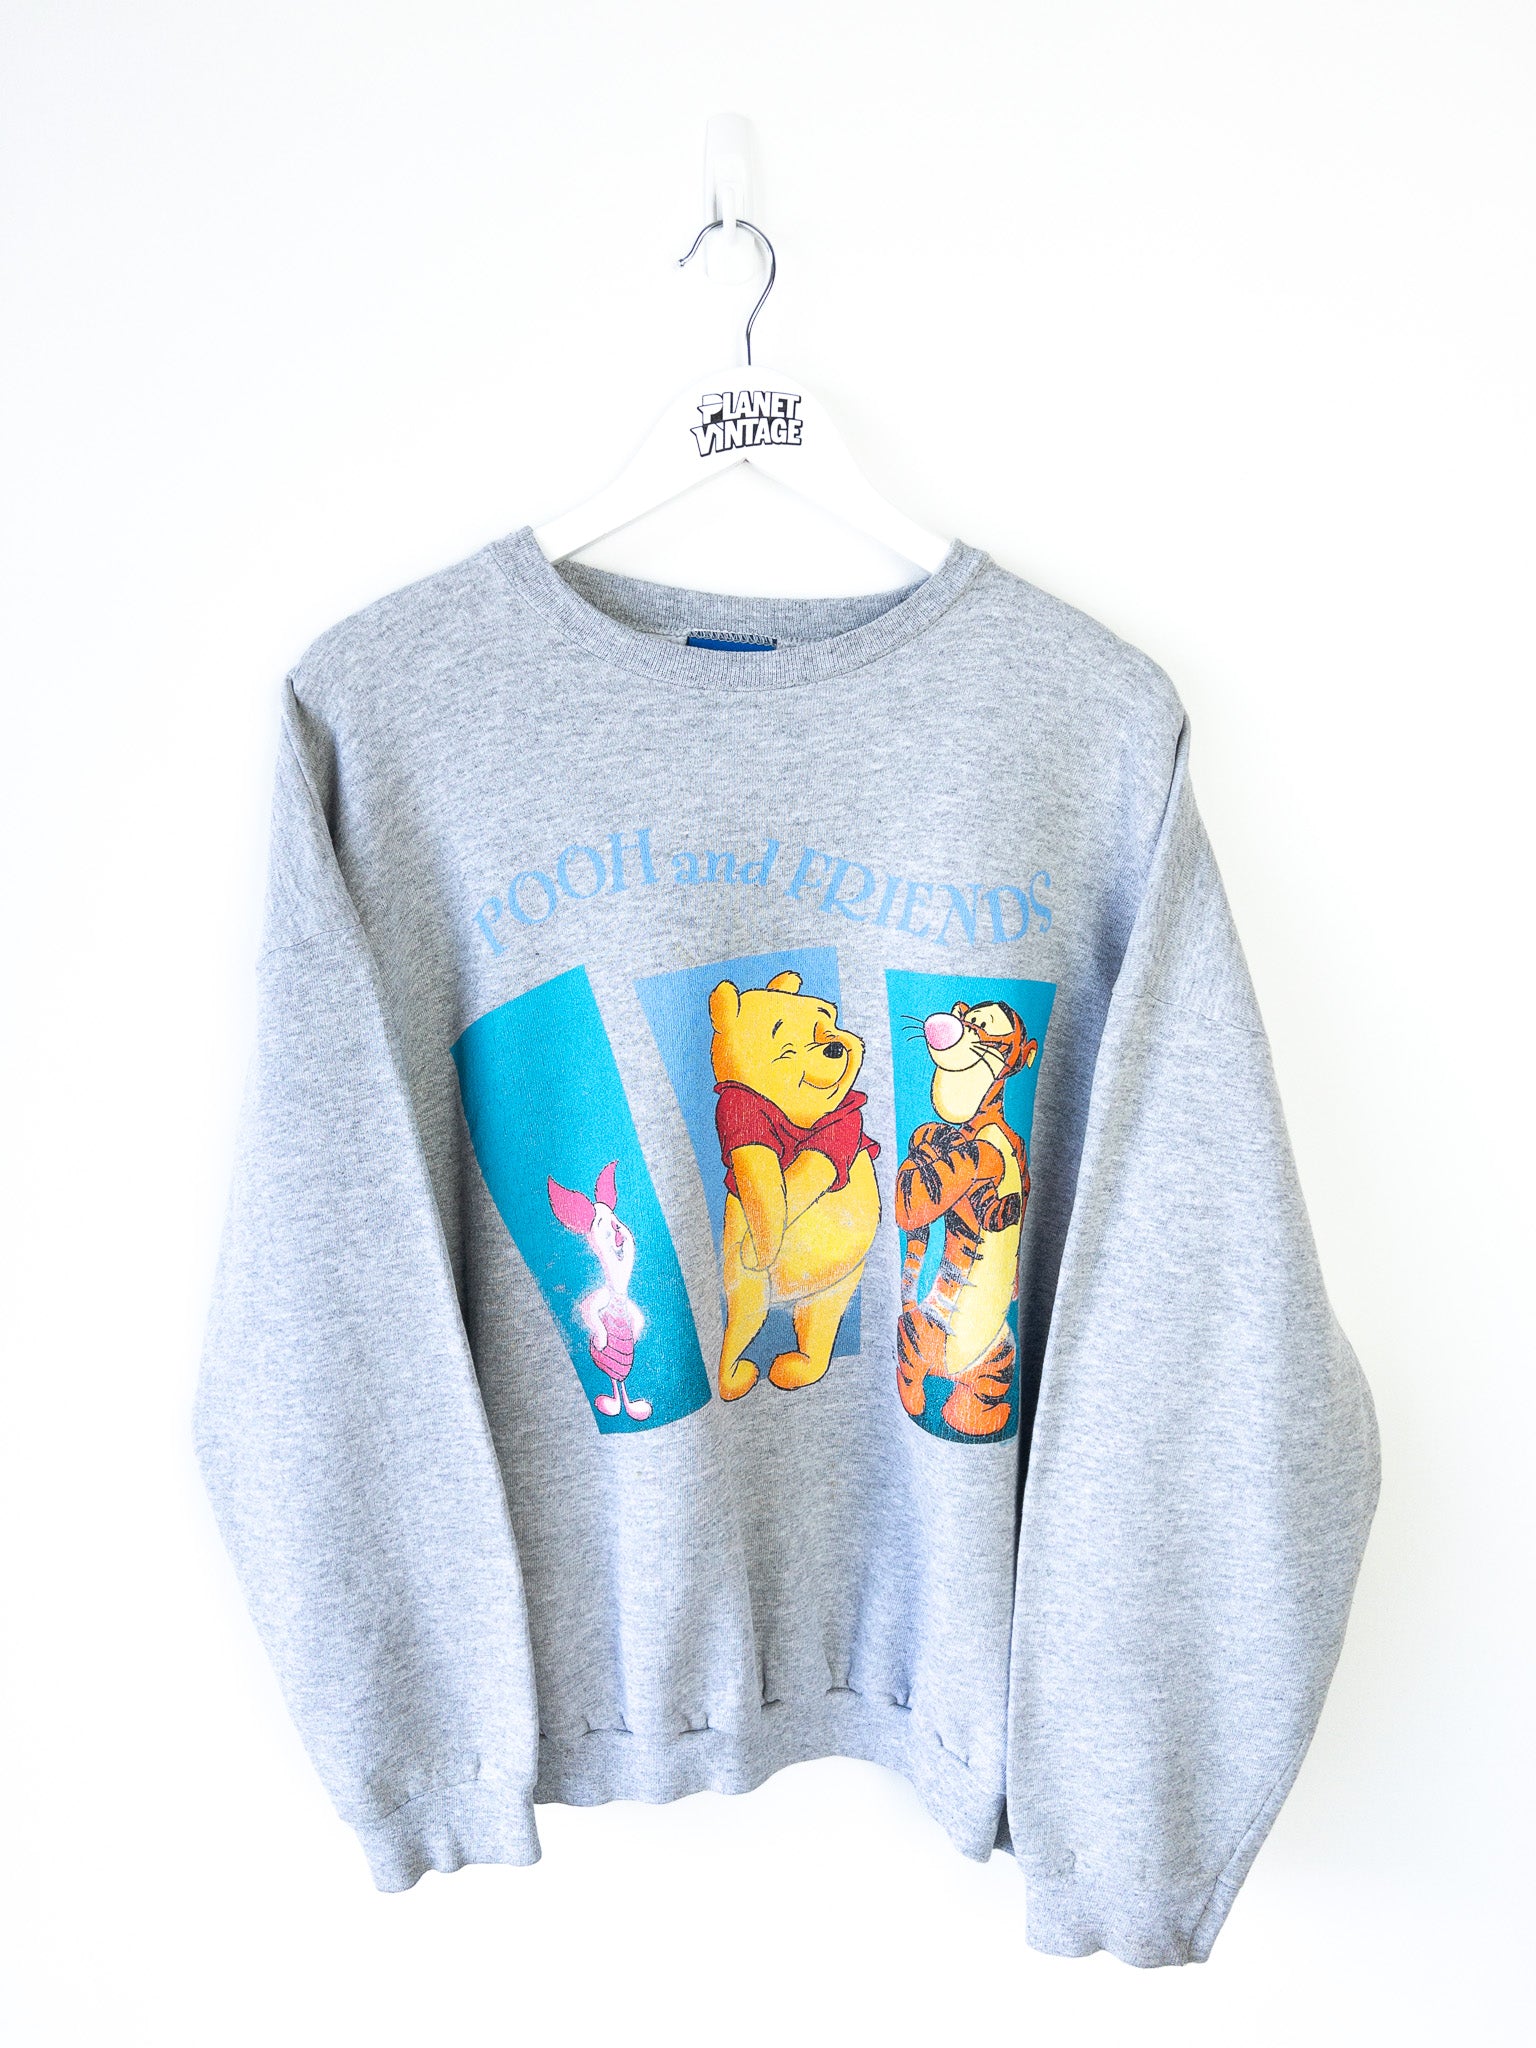 Vintage Pooh & Friends Sweatshirt (L)